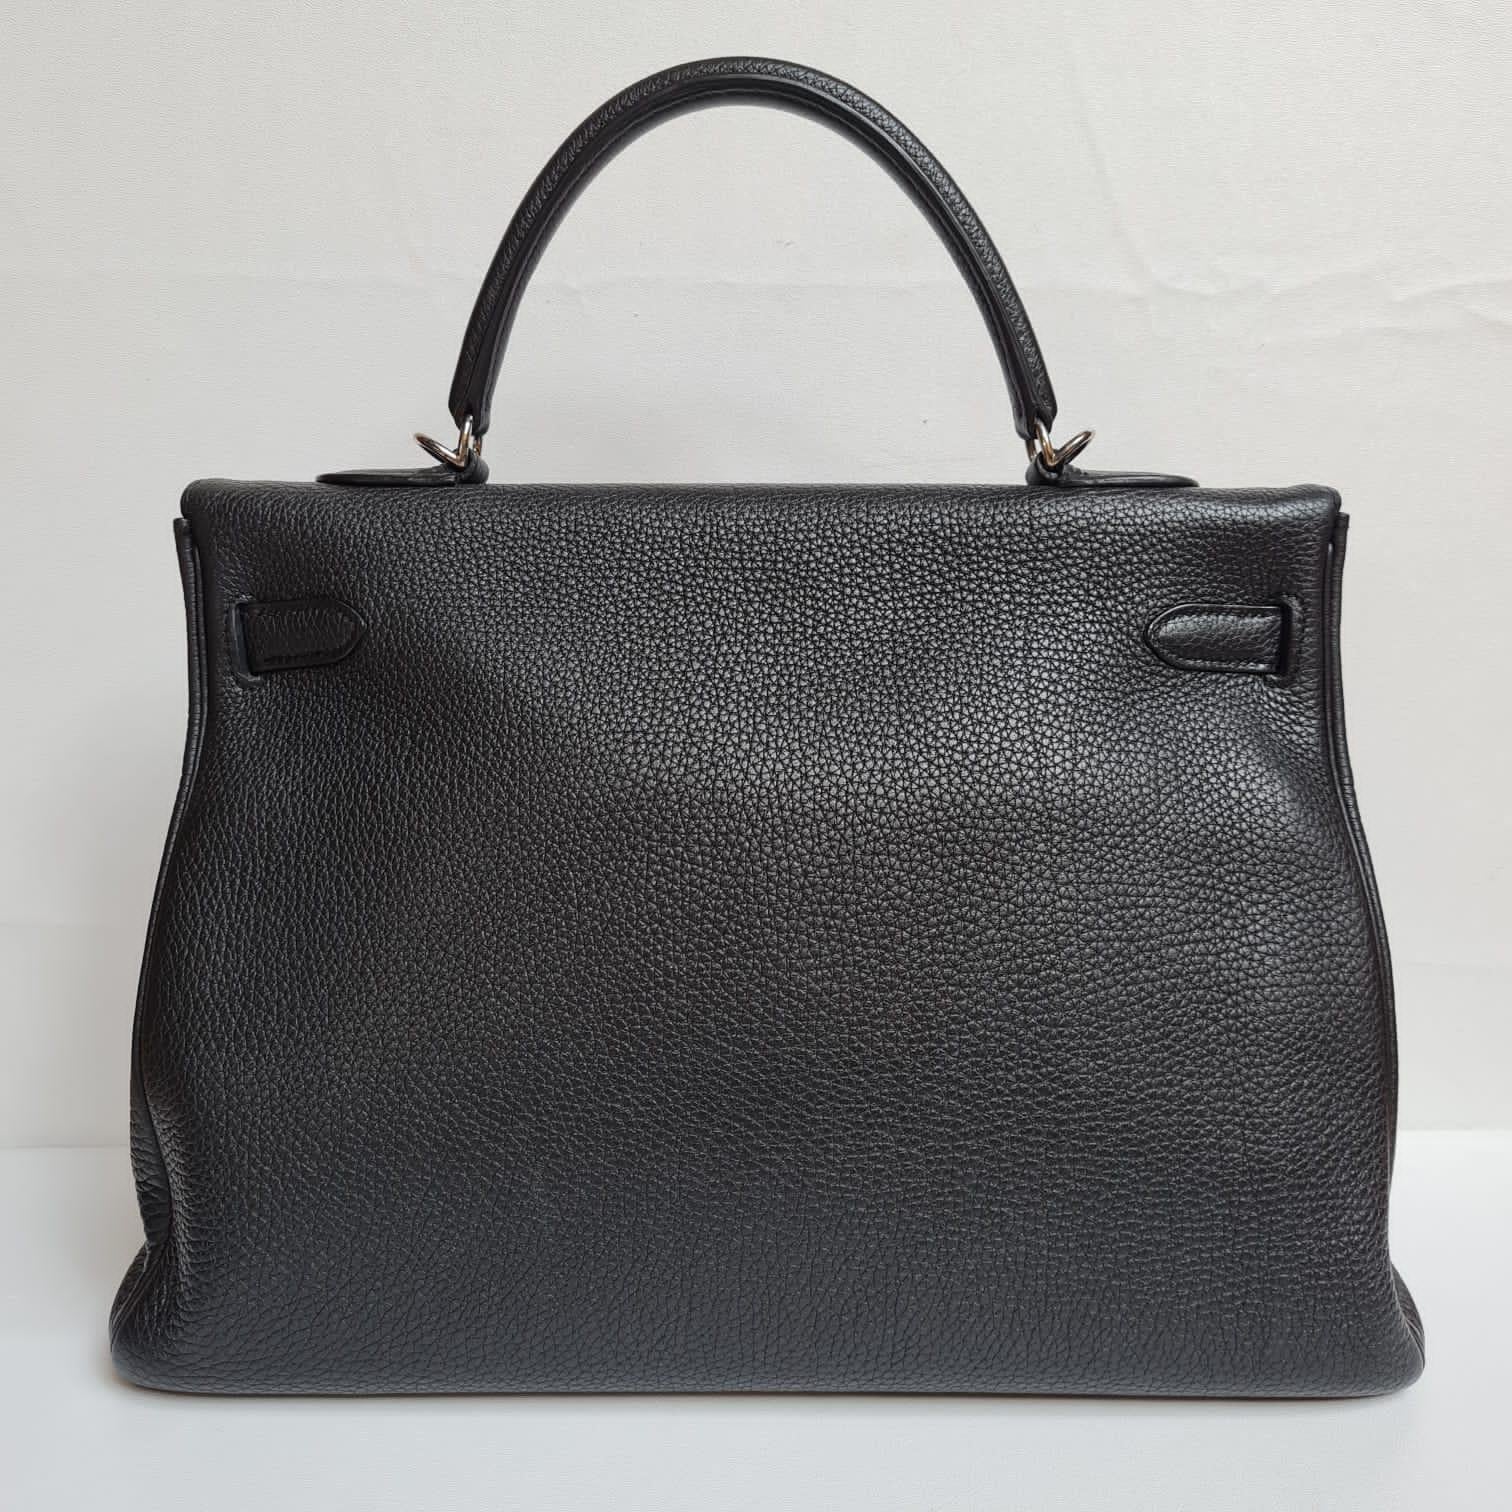 Women's or Men's Hermes Kelly 35 Togo Leather Bag